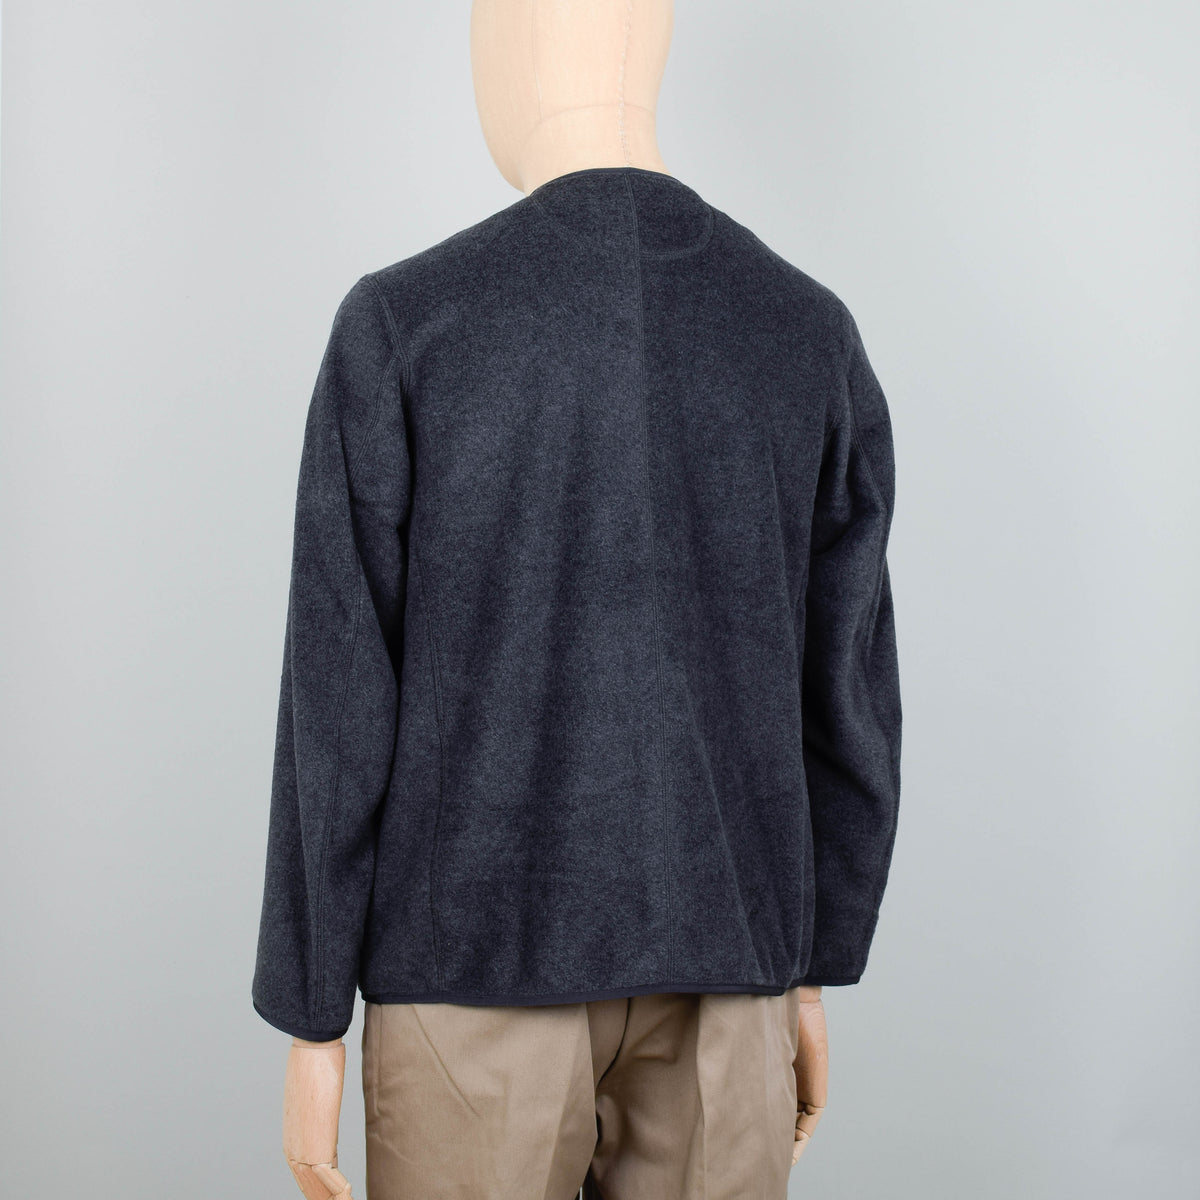 Shop for Danton Fleece Collarless Jacket JD-8939 - Charcoal Grey